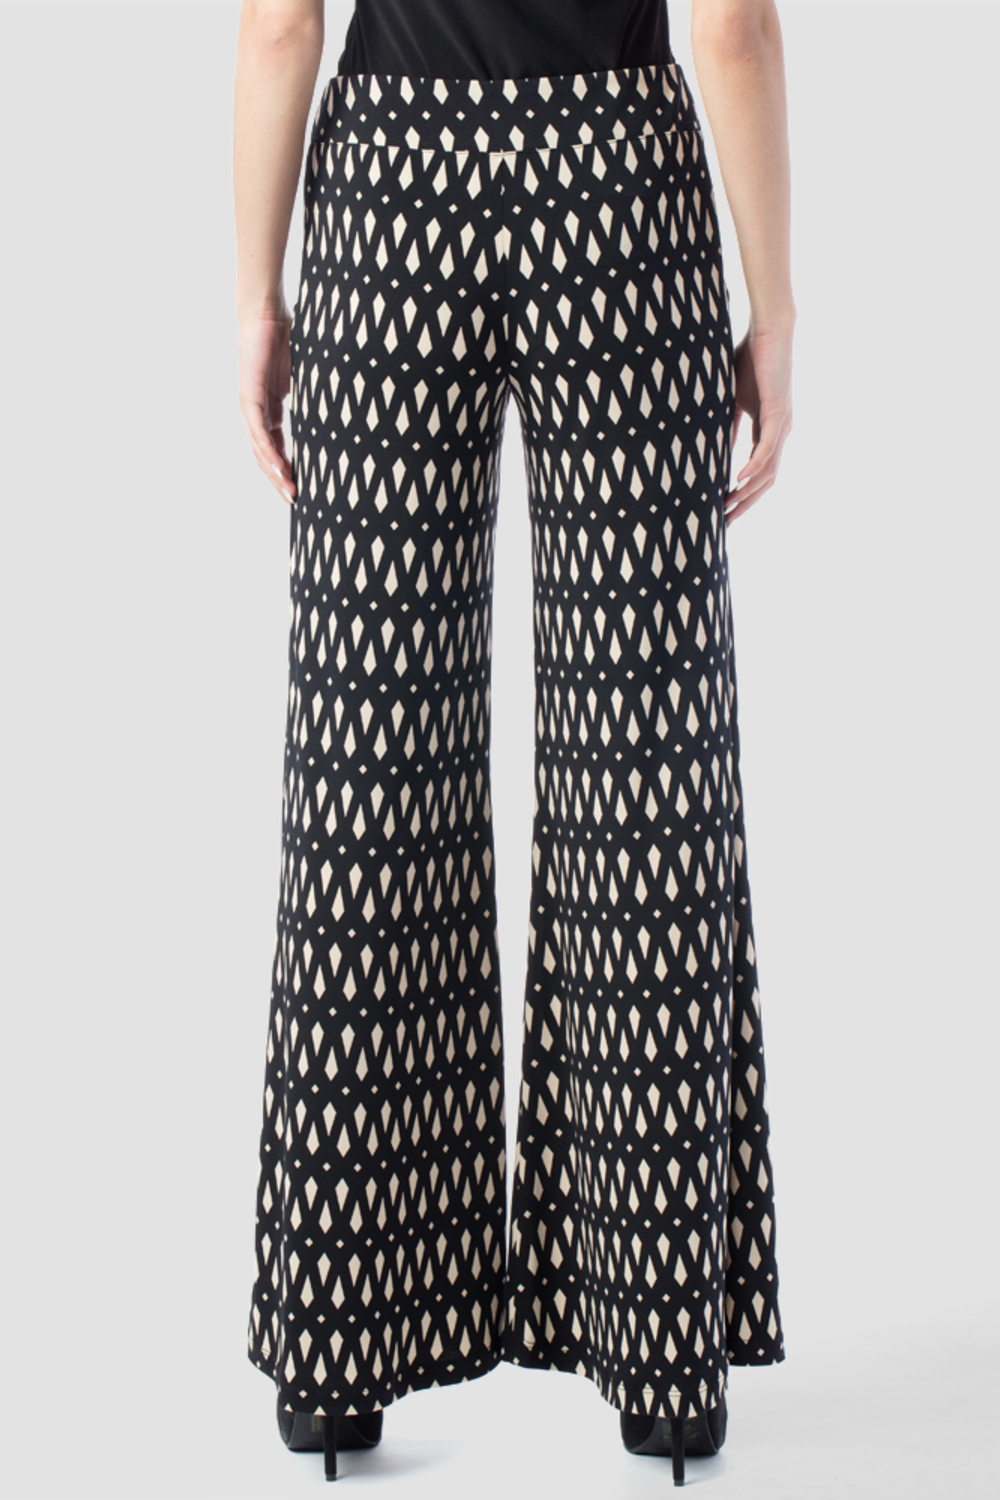 Joseph Ribkoff pantalon style 153774. Beige/noir